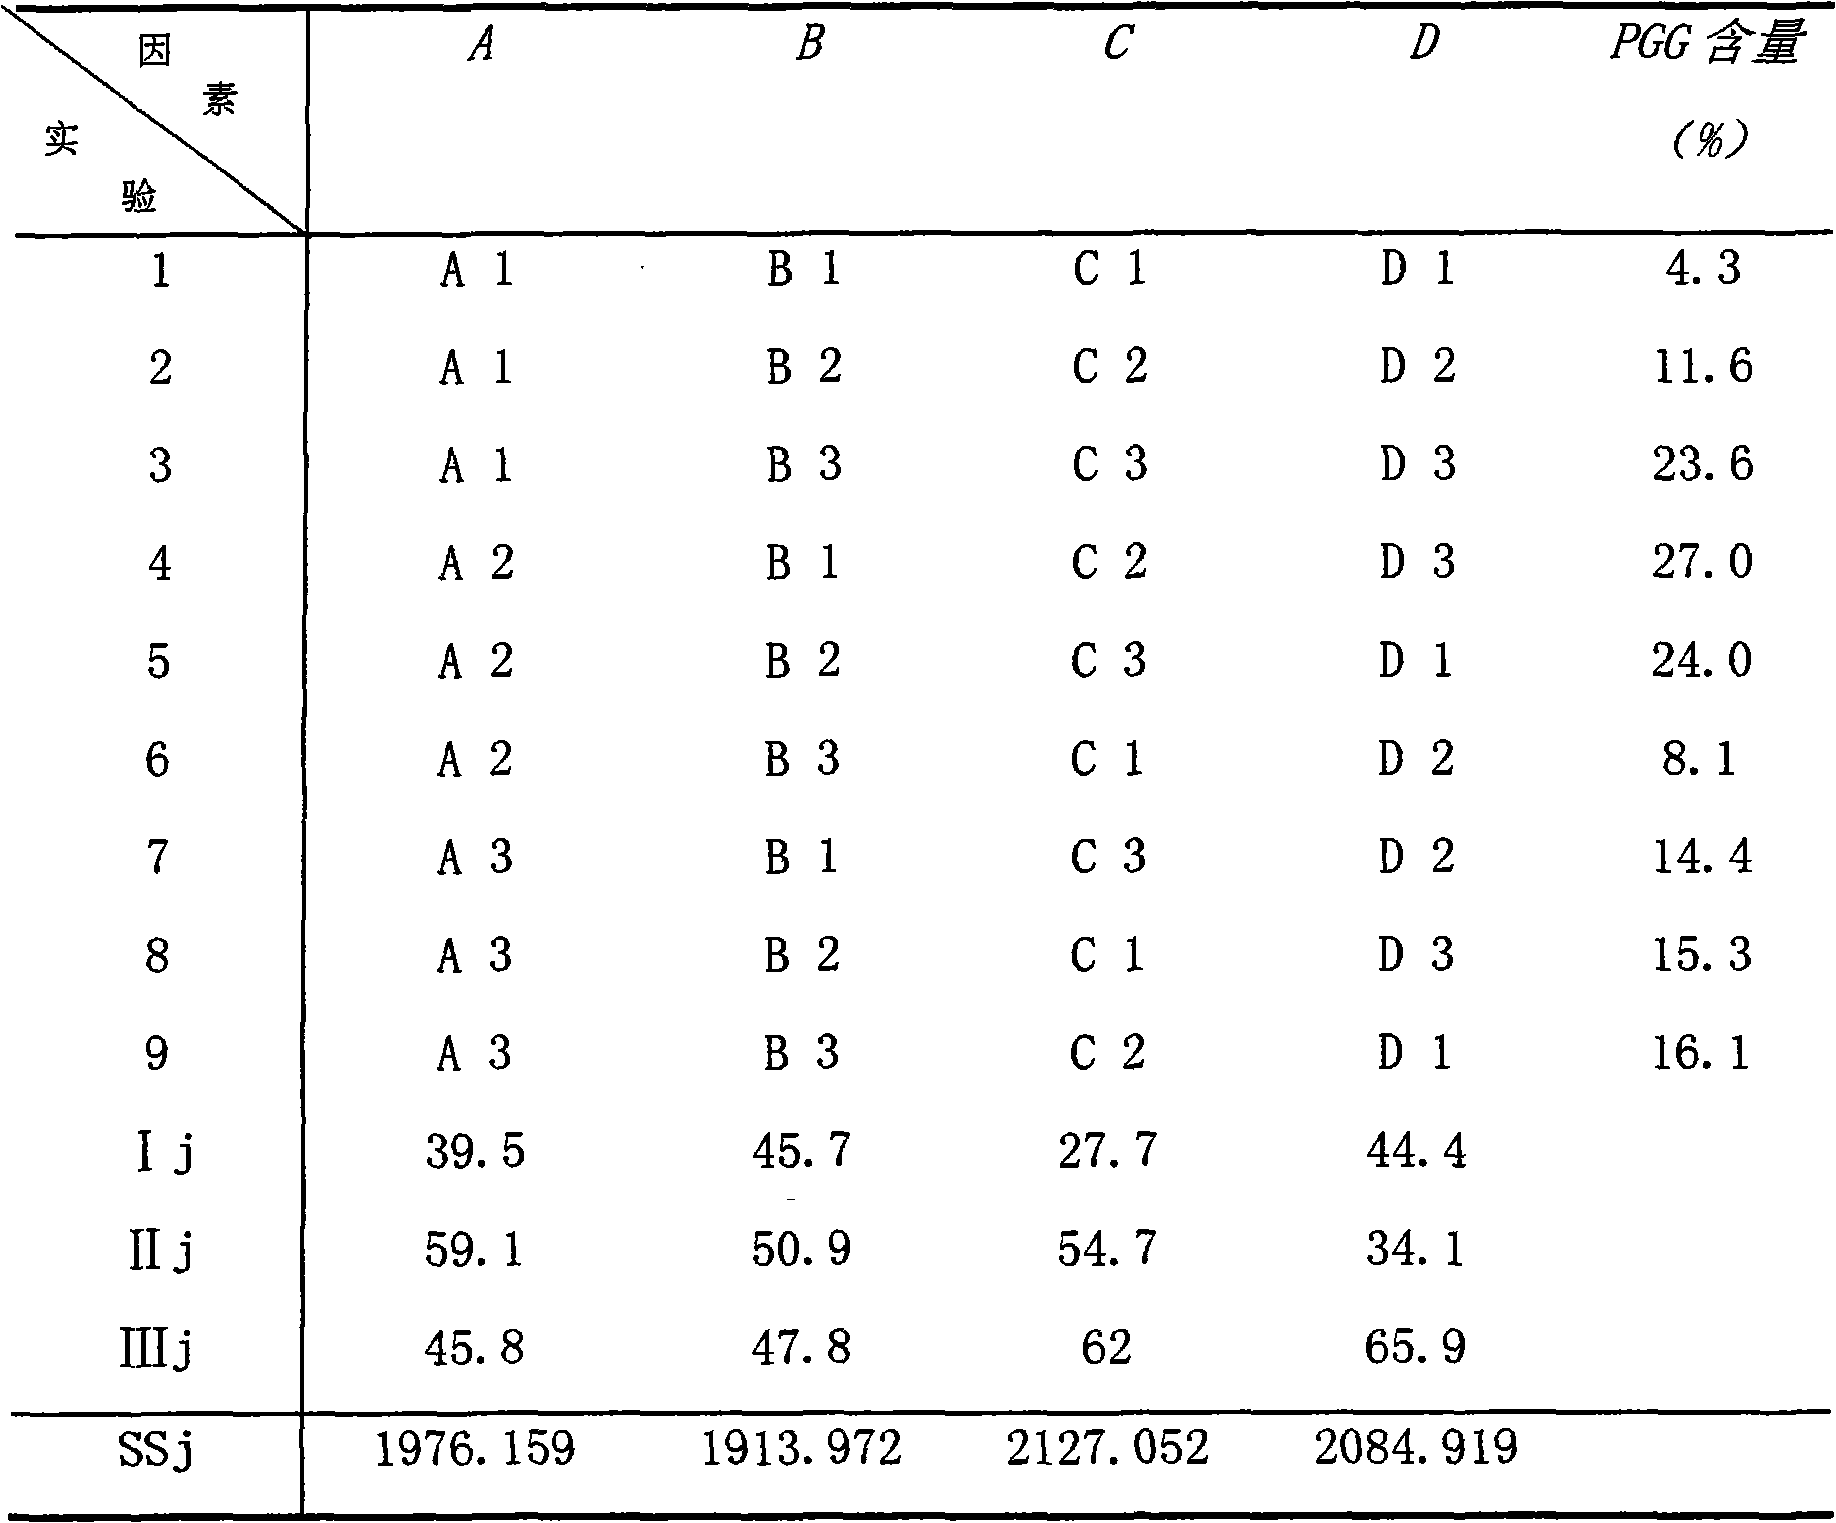 Method for preparing 1,2,3,4,6-penta-O-galloyl-beta-D-glucose (PGG)